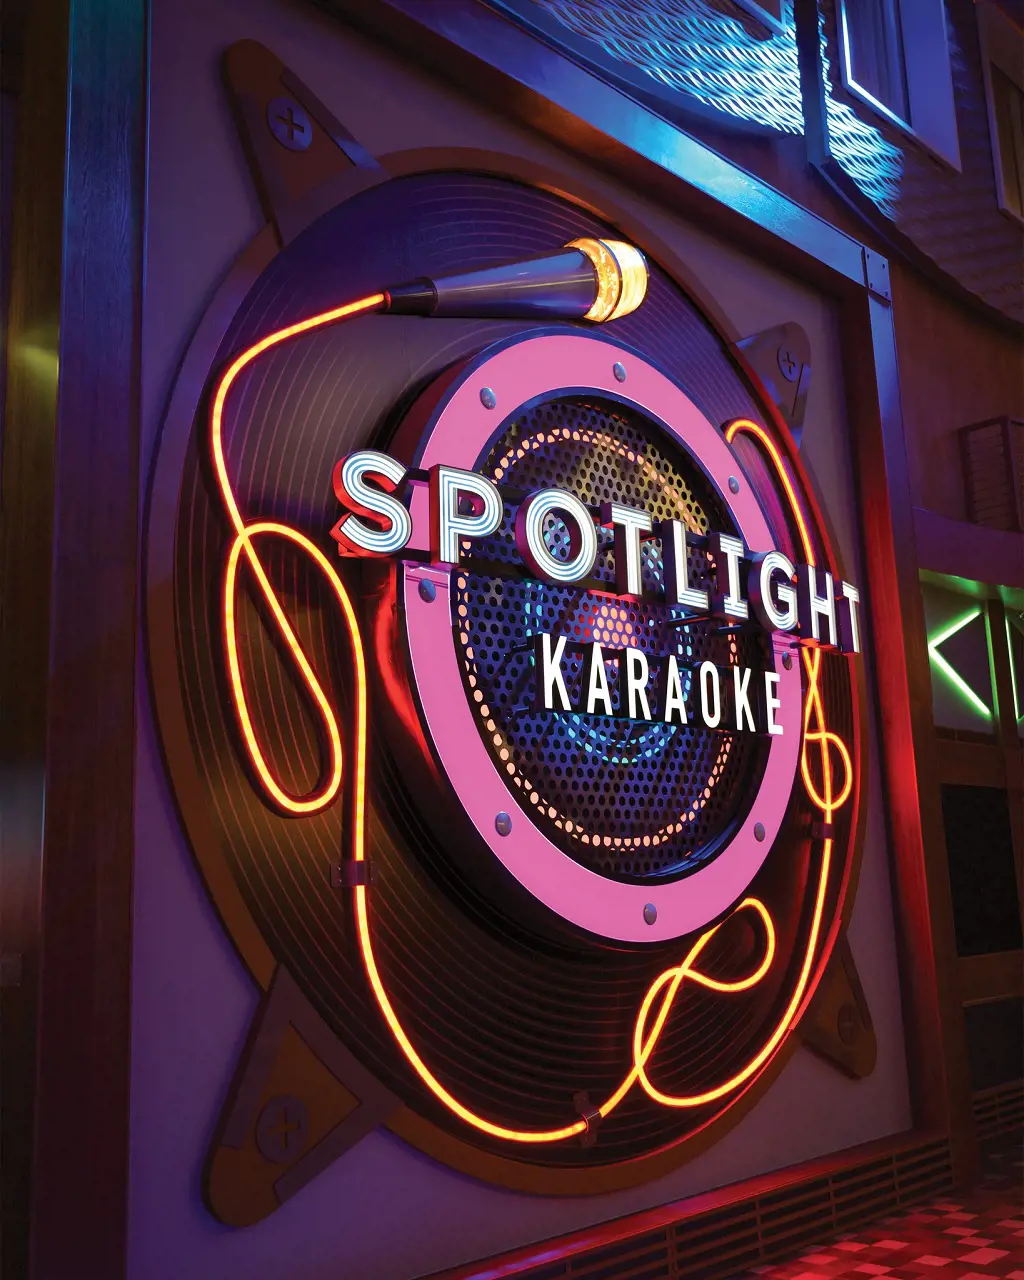 Spotlight Karaoke is located on Deck 5 of the Wonder of the Seas